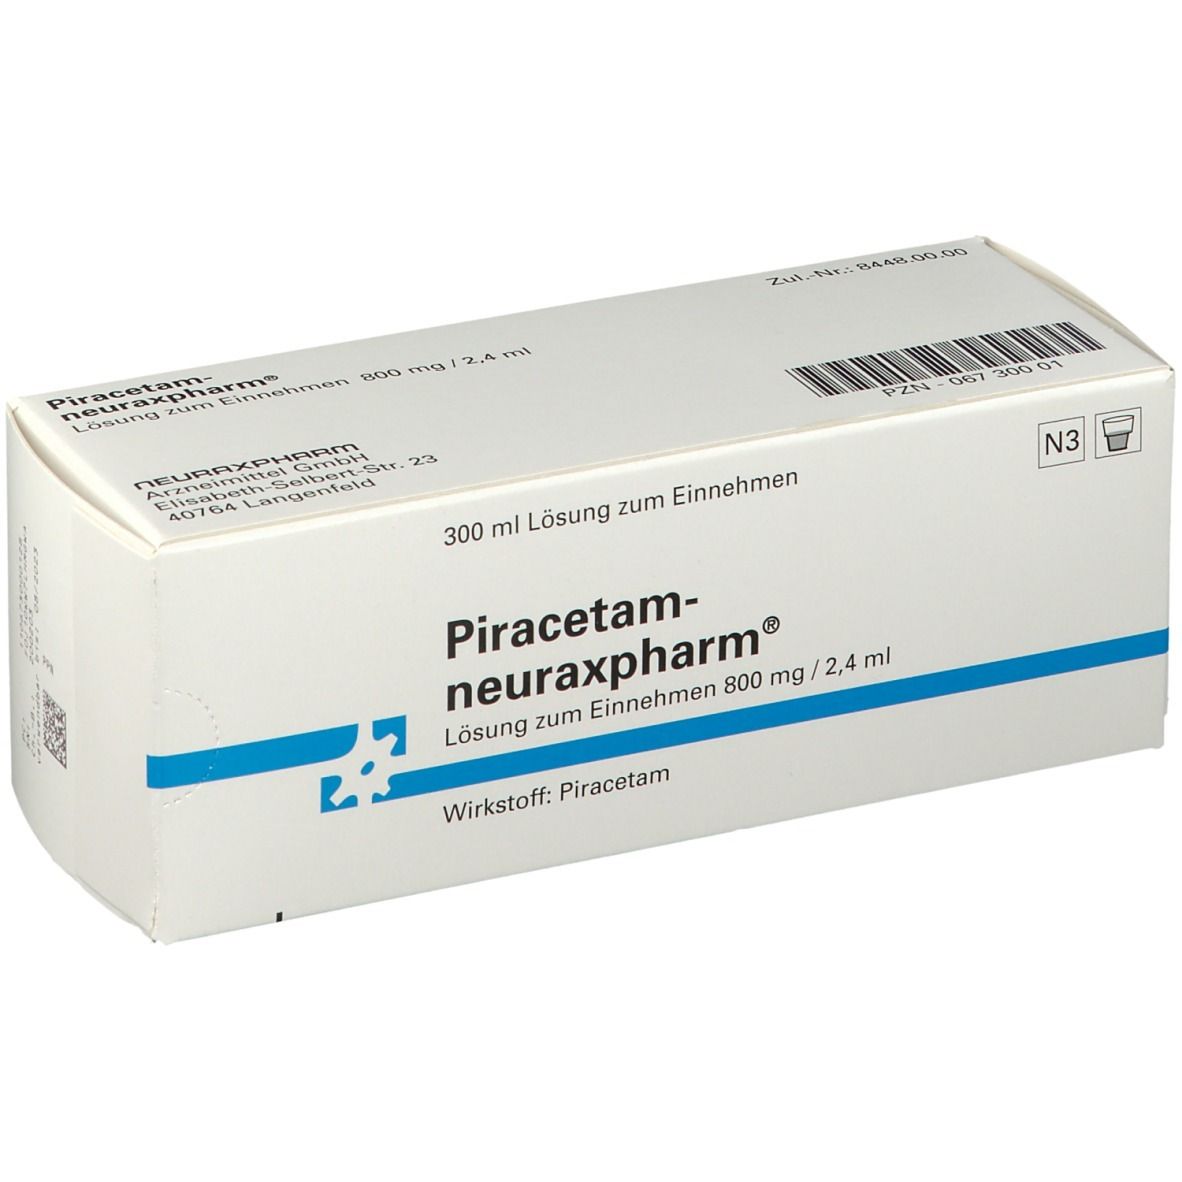 Piracetam-neuraxpharm® 800 mg/2,4 ml Loesung